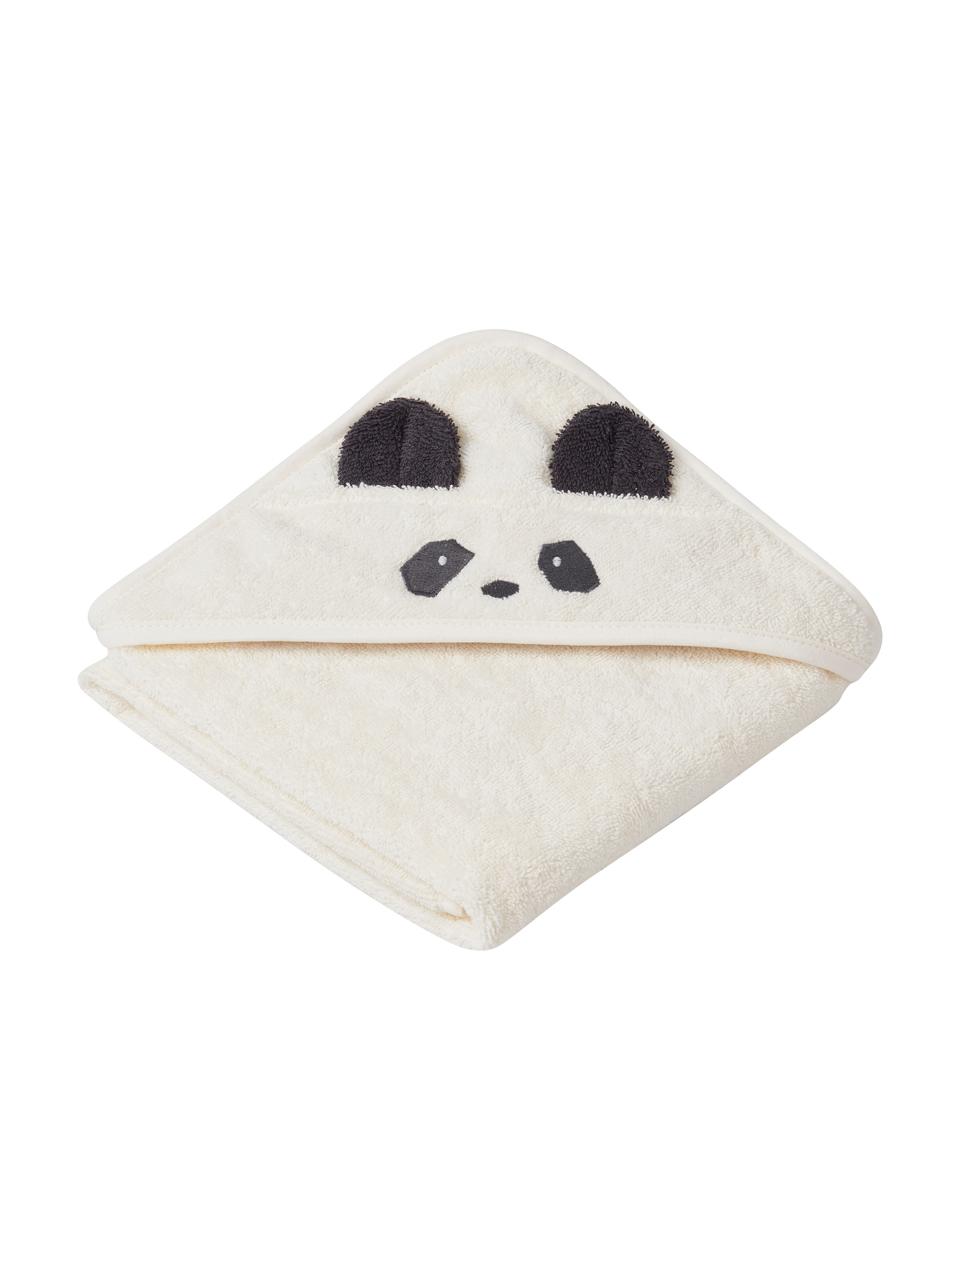 Detský uterák Albert Panda, 100% organická bavlna (bavlnené froté), certifikát GOTS, Biela, čierna, Š 70 x D 70 cm